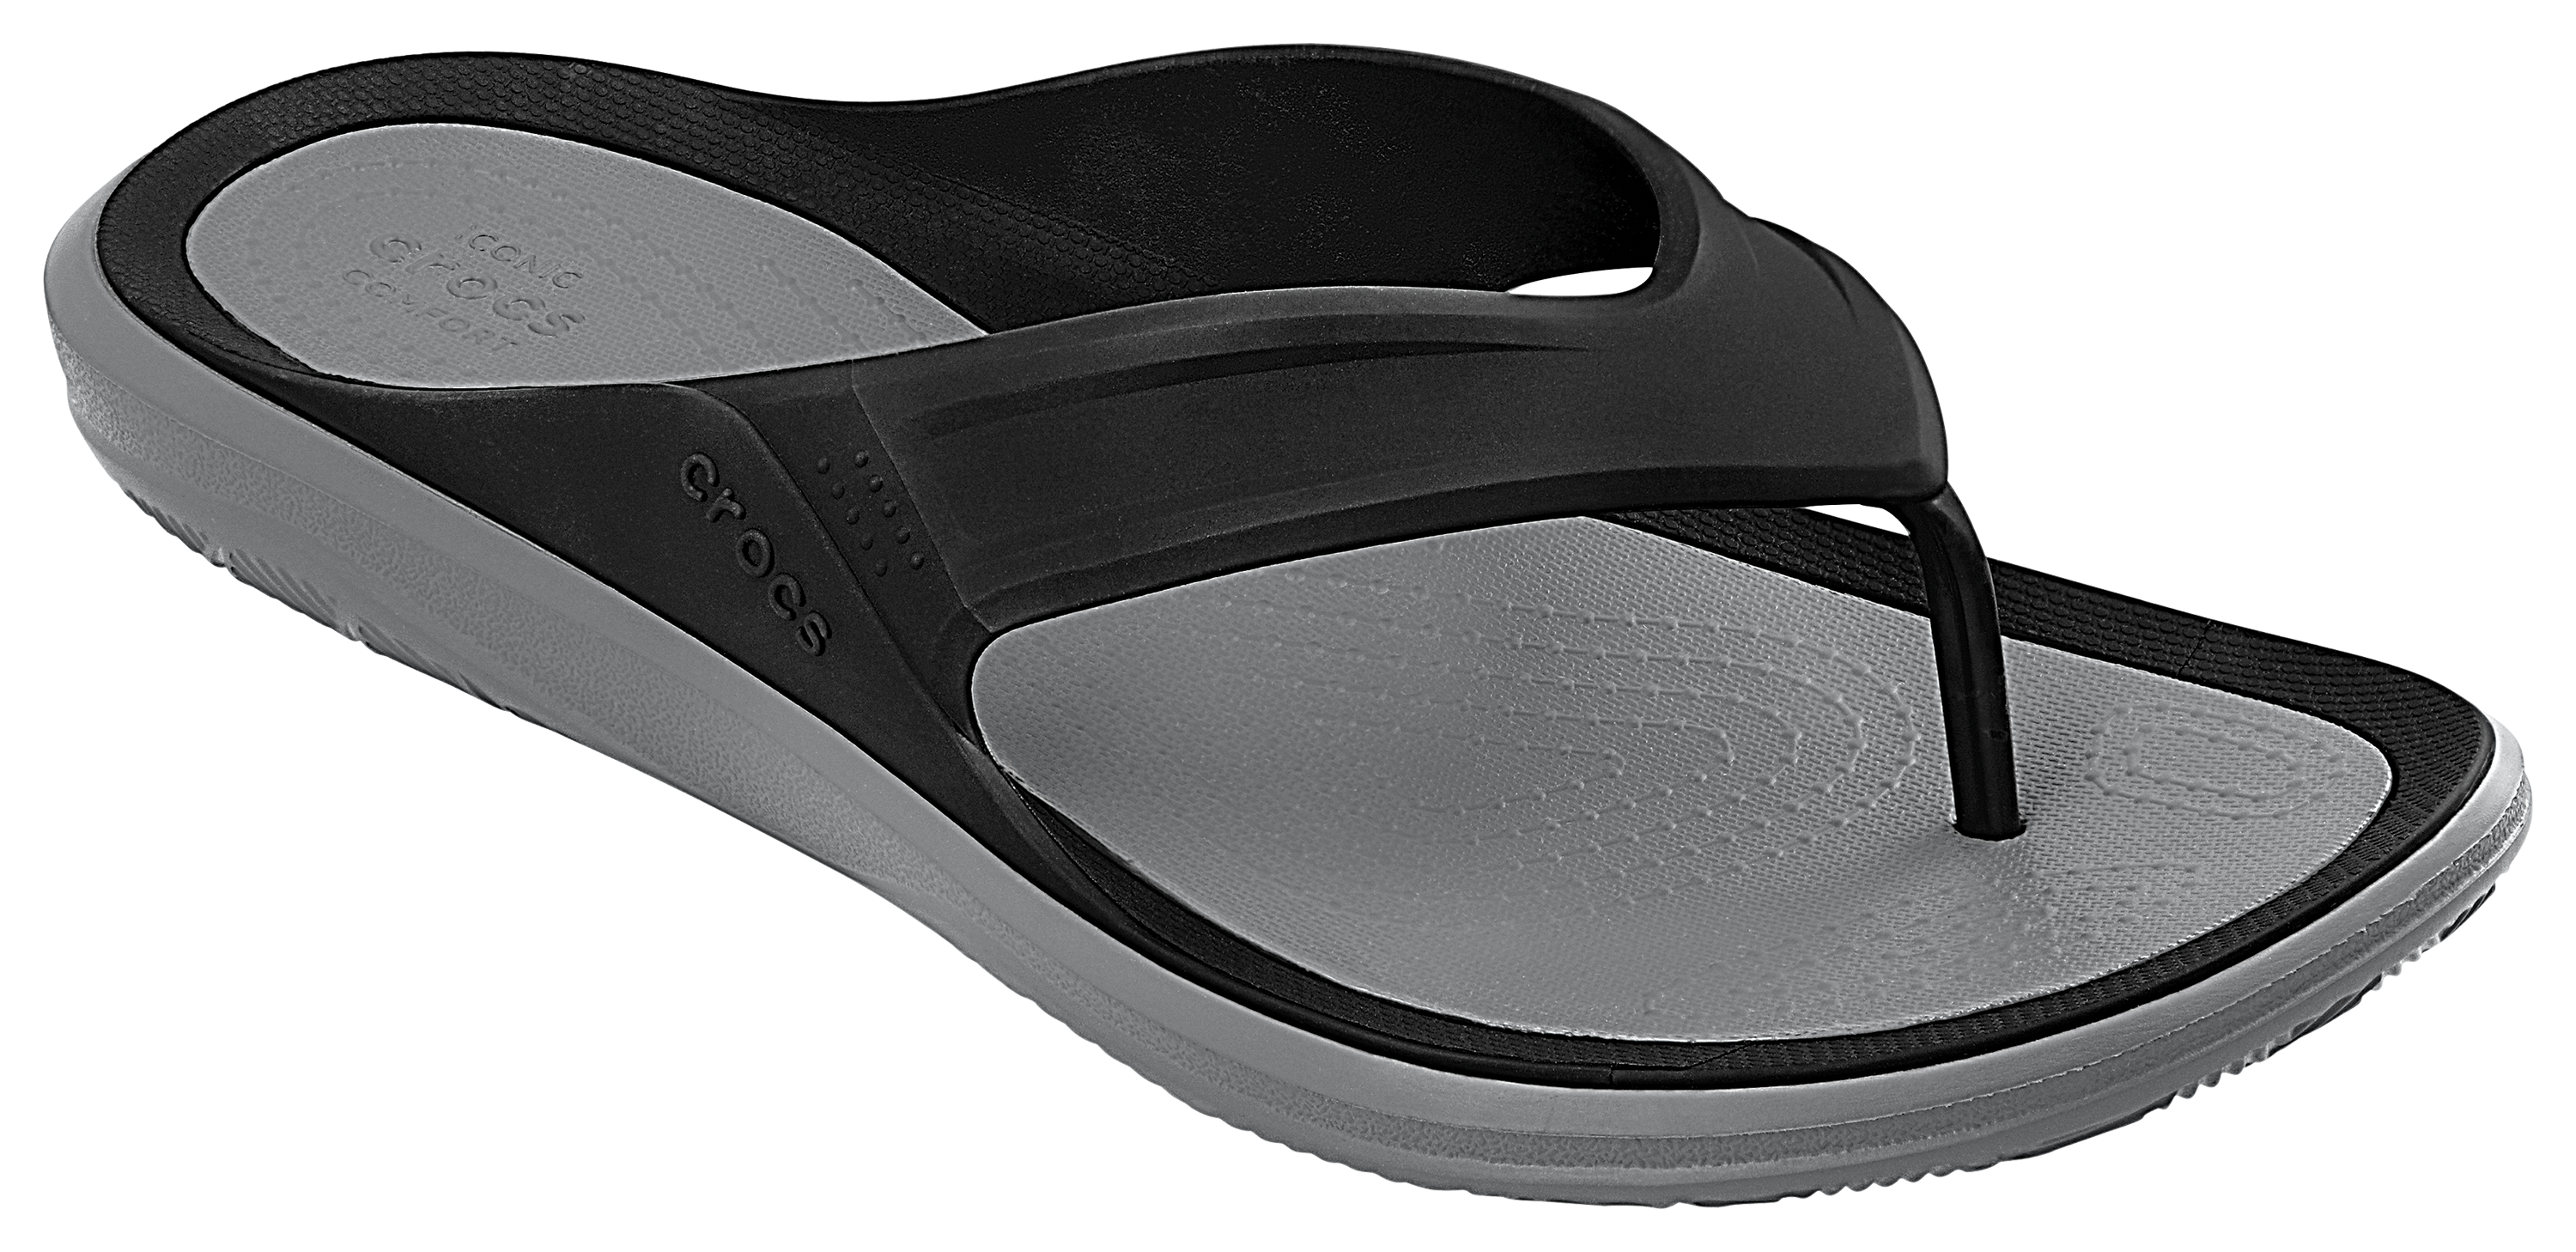 Crocs Swiftwater Wave Flip Thong Sandals for Men - Black/Gray - 12M